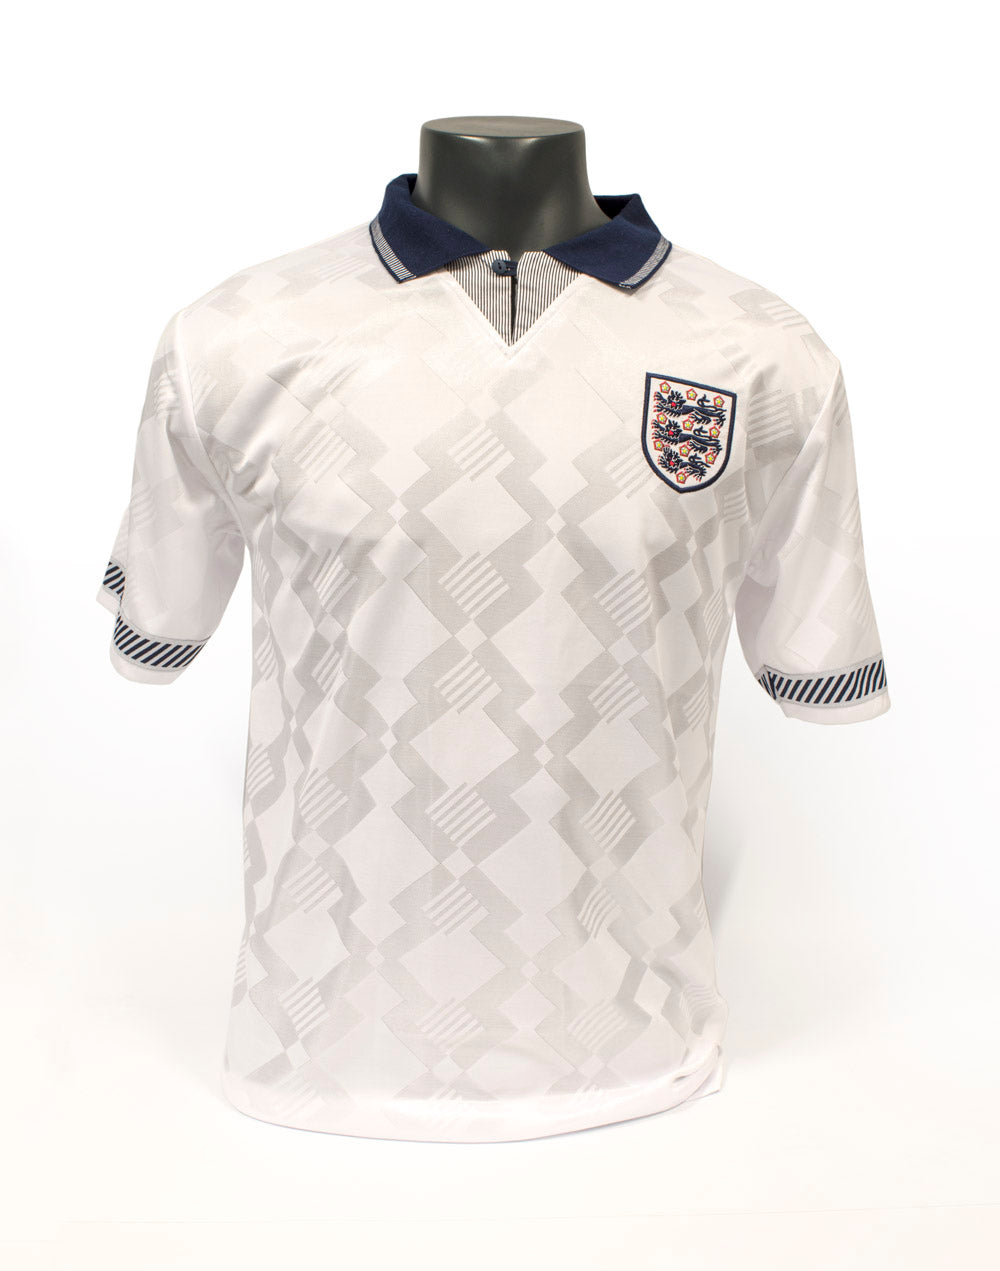 Paul Gascoigne Signed 1990 England World Cup Shirt